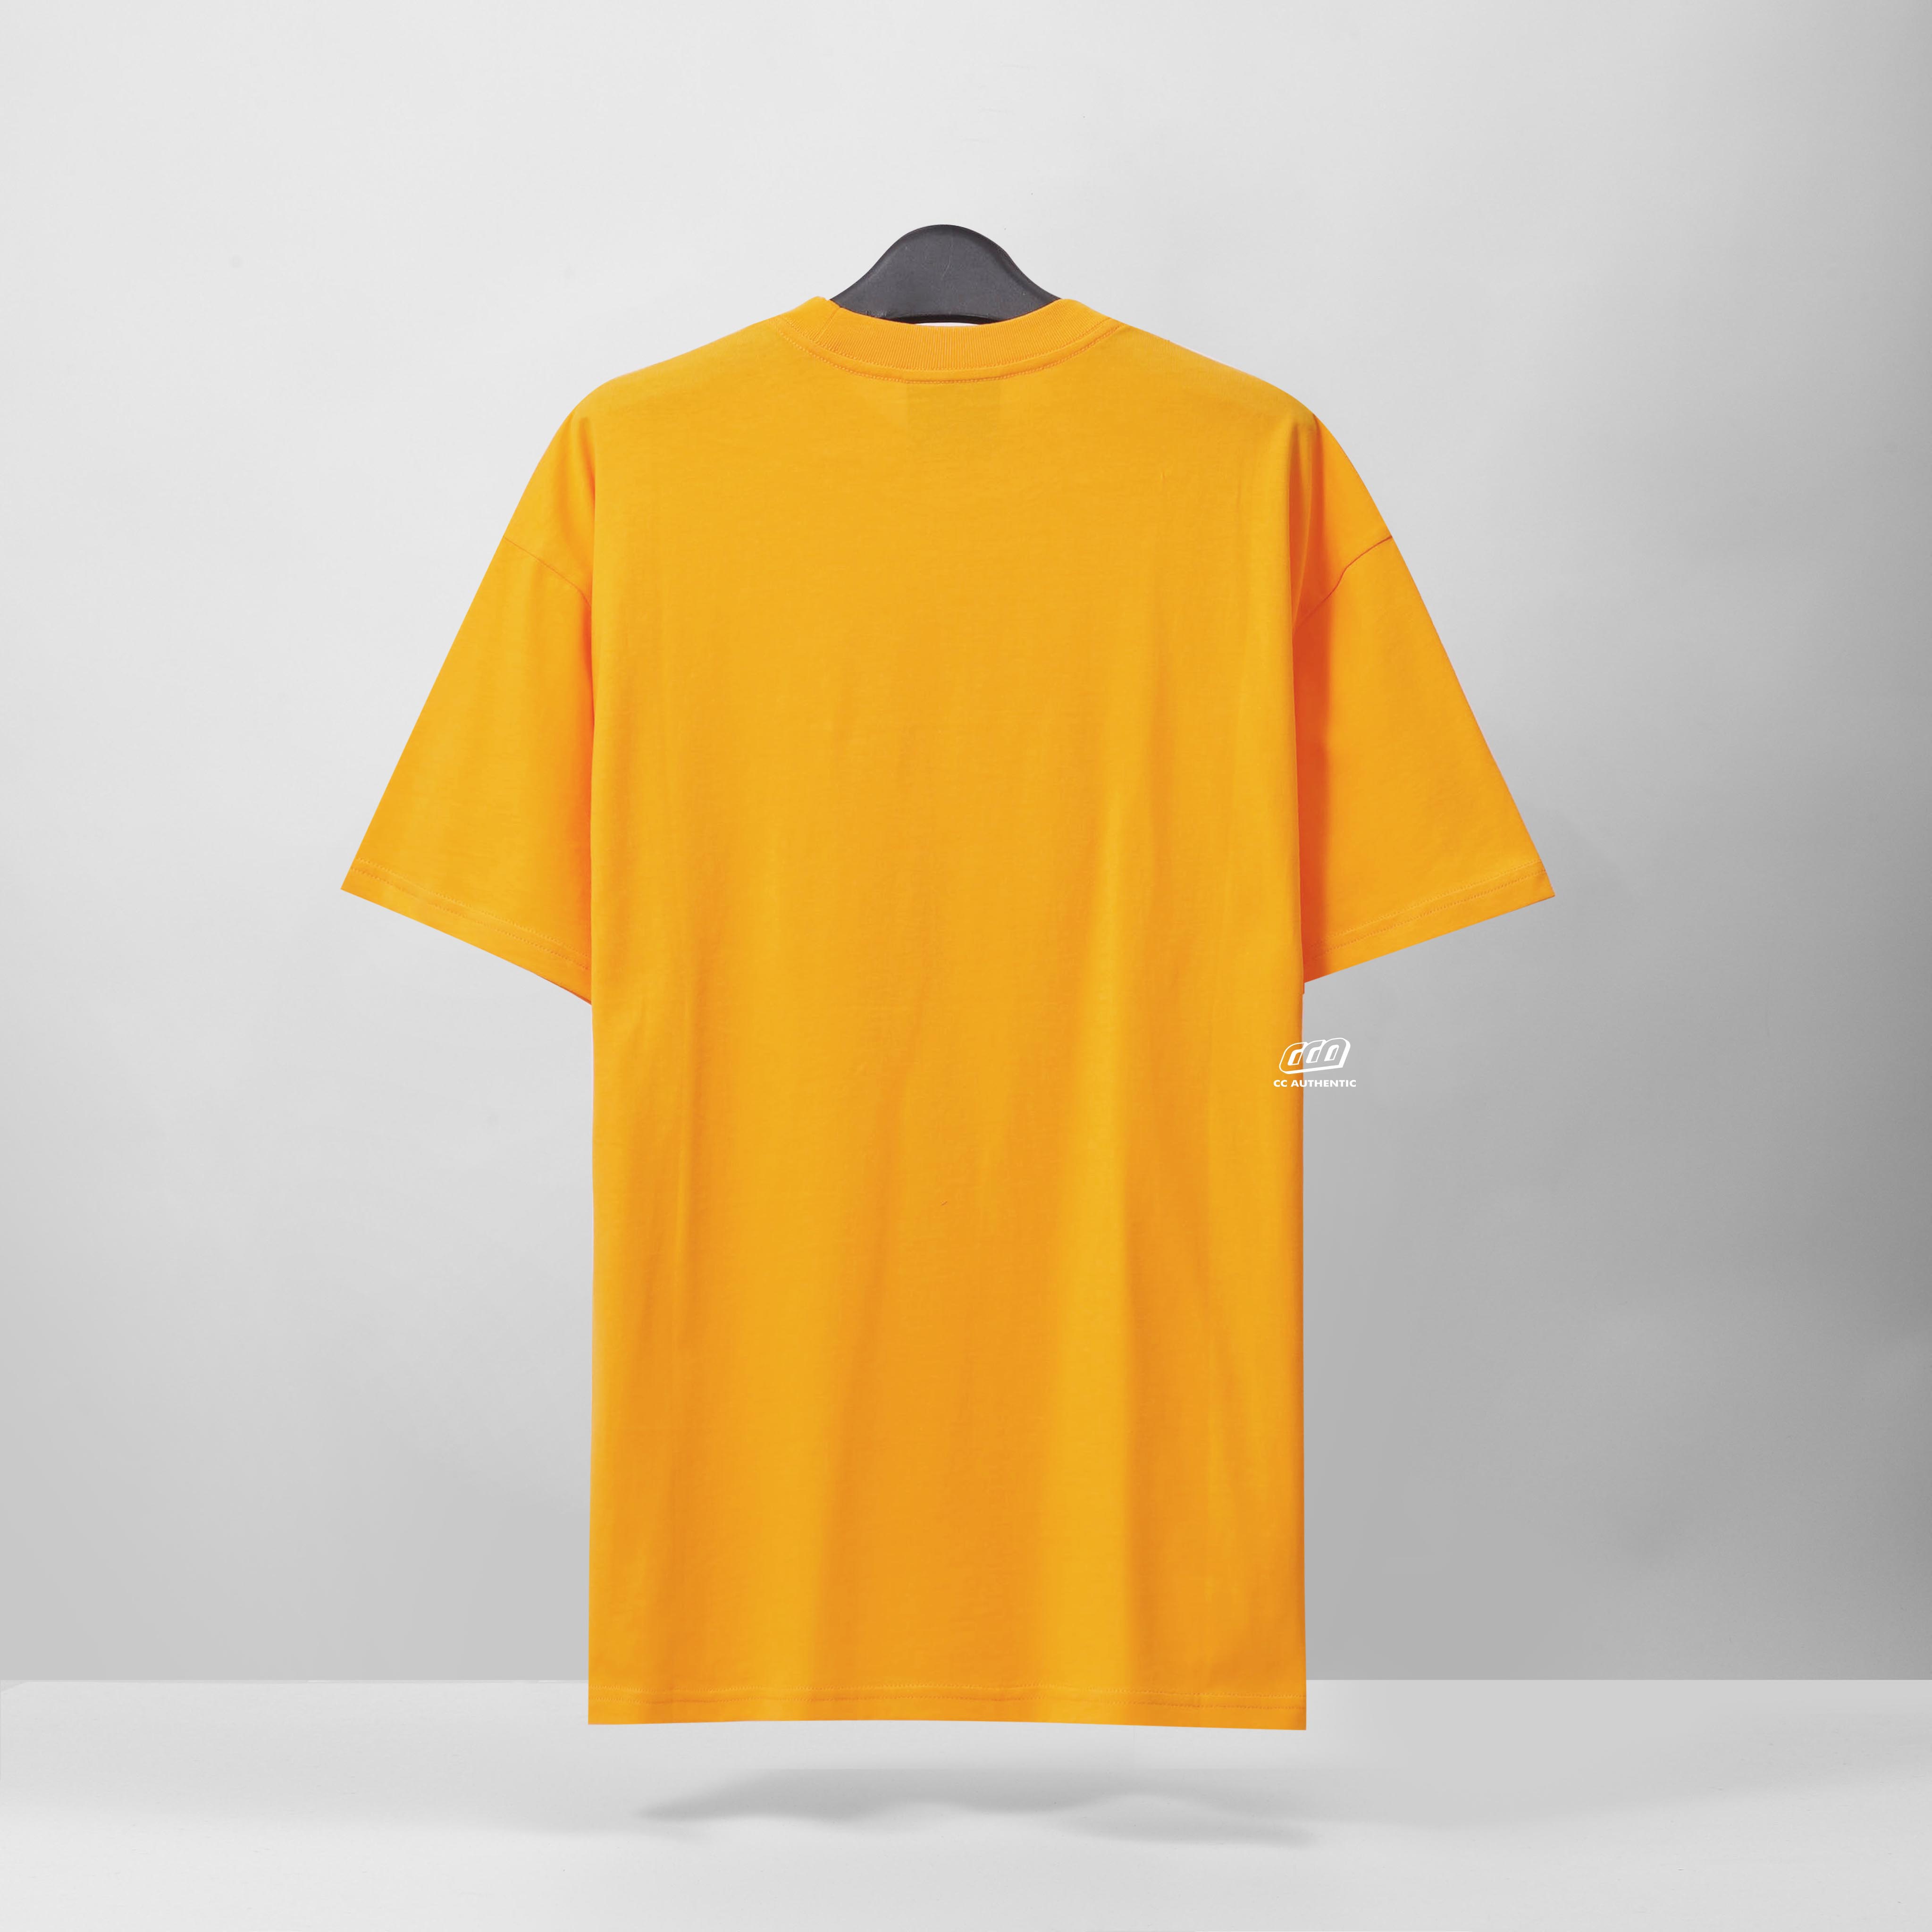 Drew House Mascot SS Tshirt - Golden Yellow